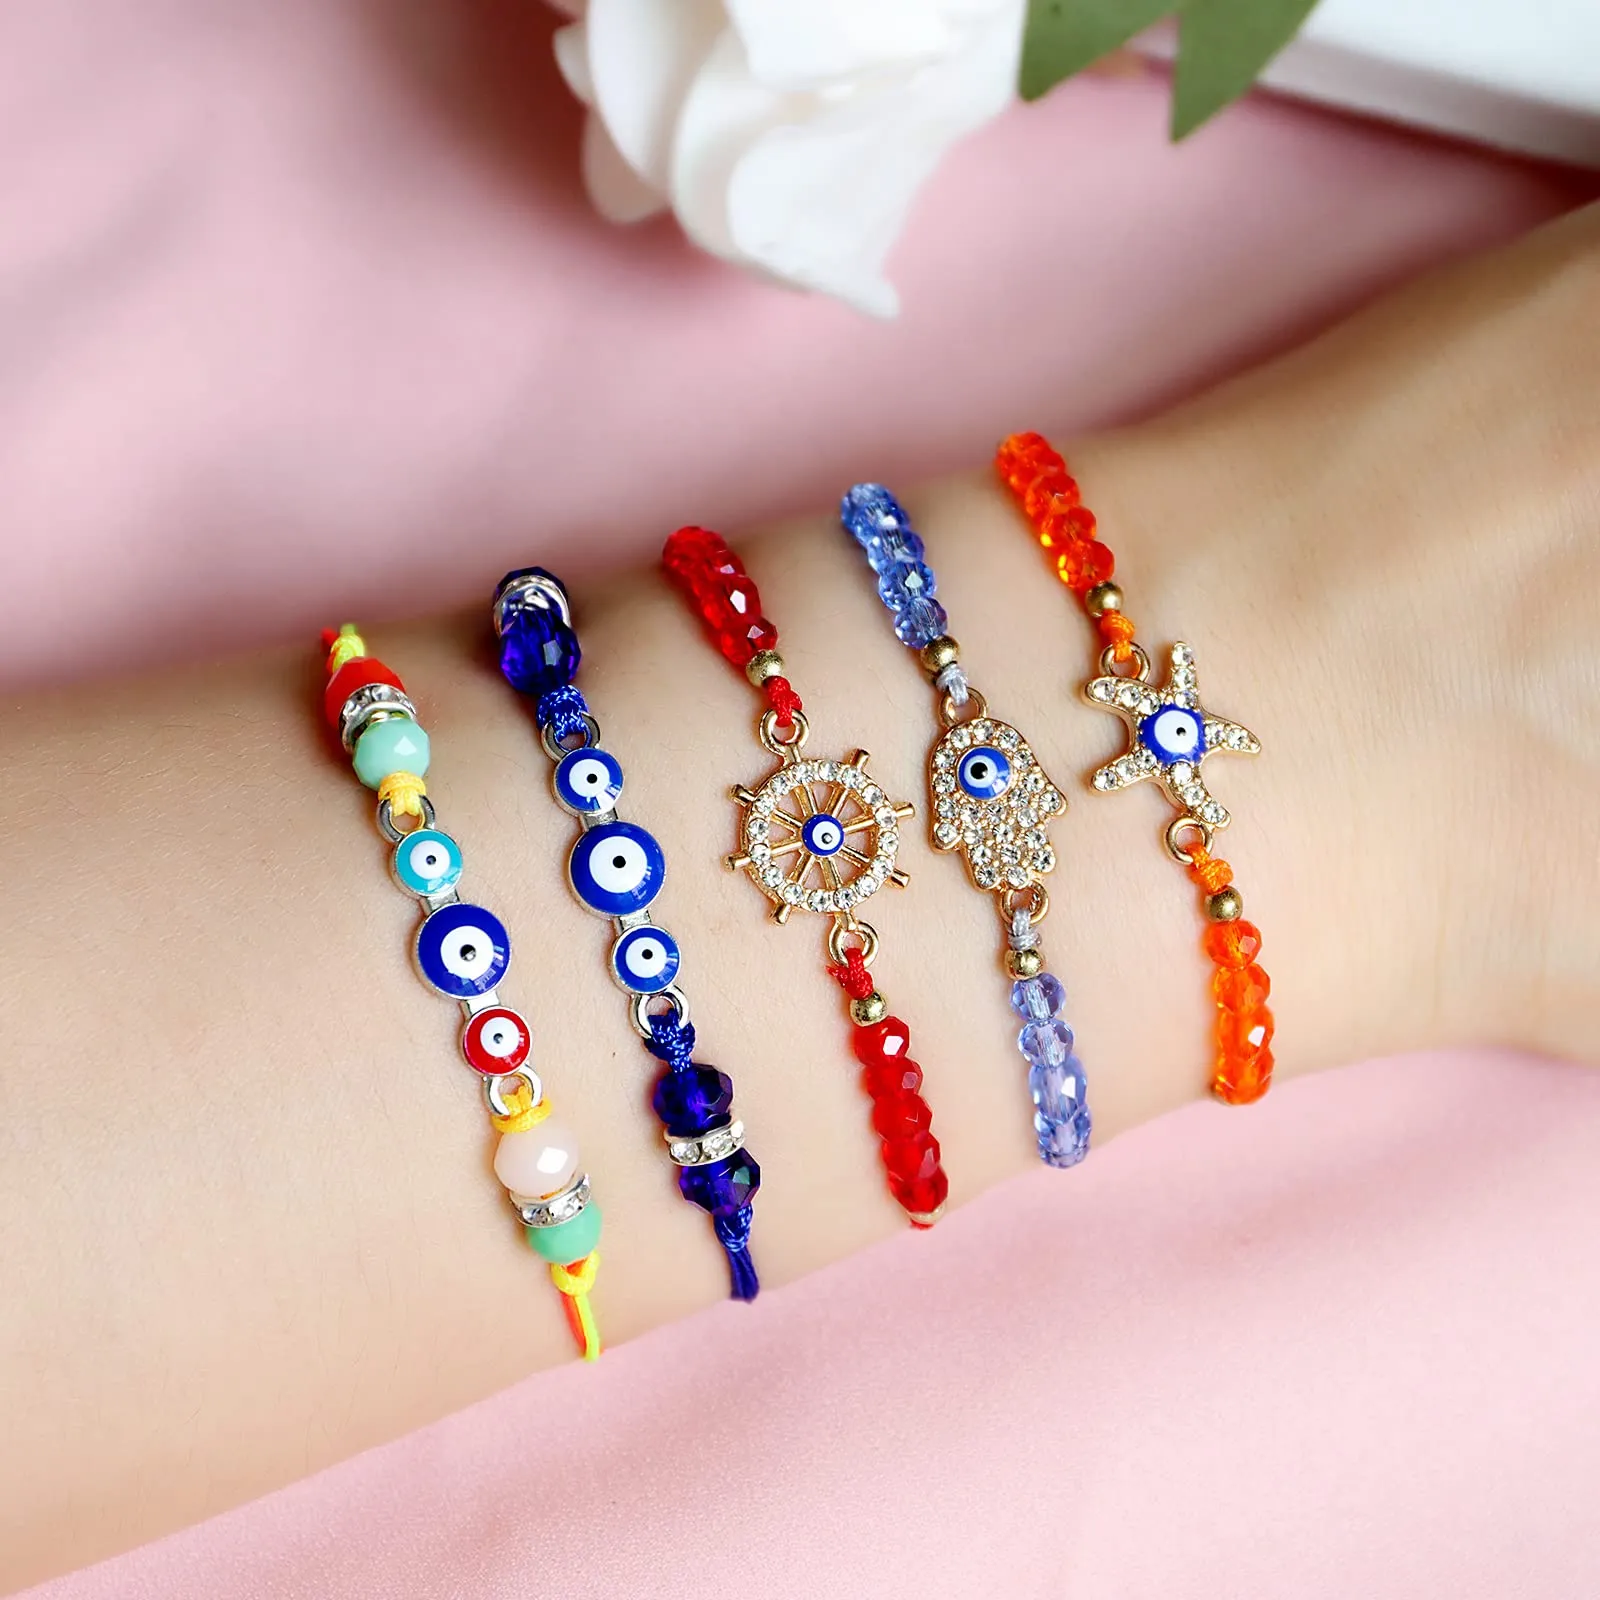 evil eye bracelets pack for women girls boys - adjustable mexican bracelets with blue red black string knot - handmade bracelets with beads